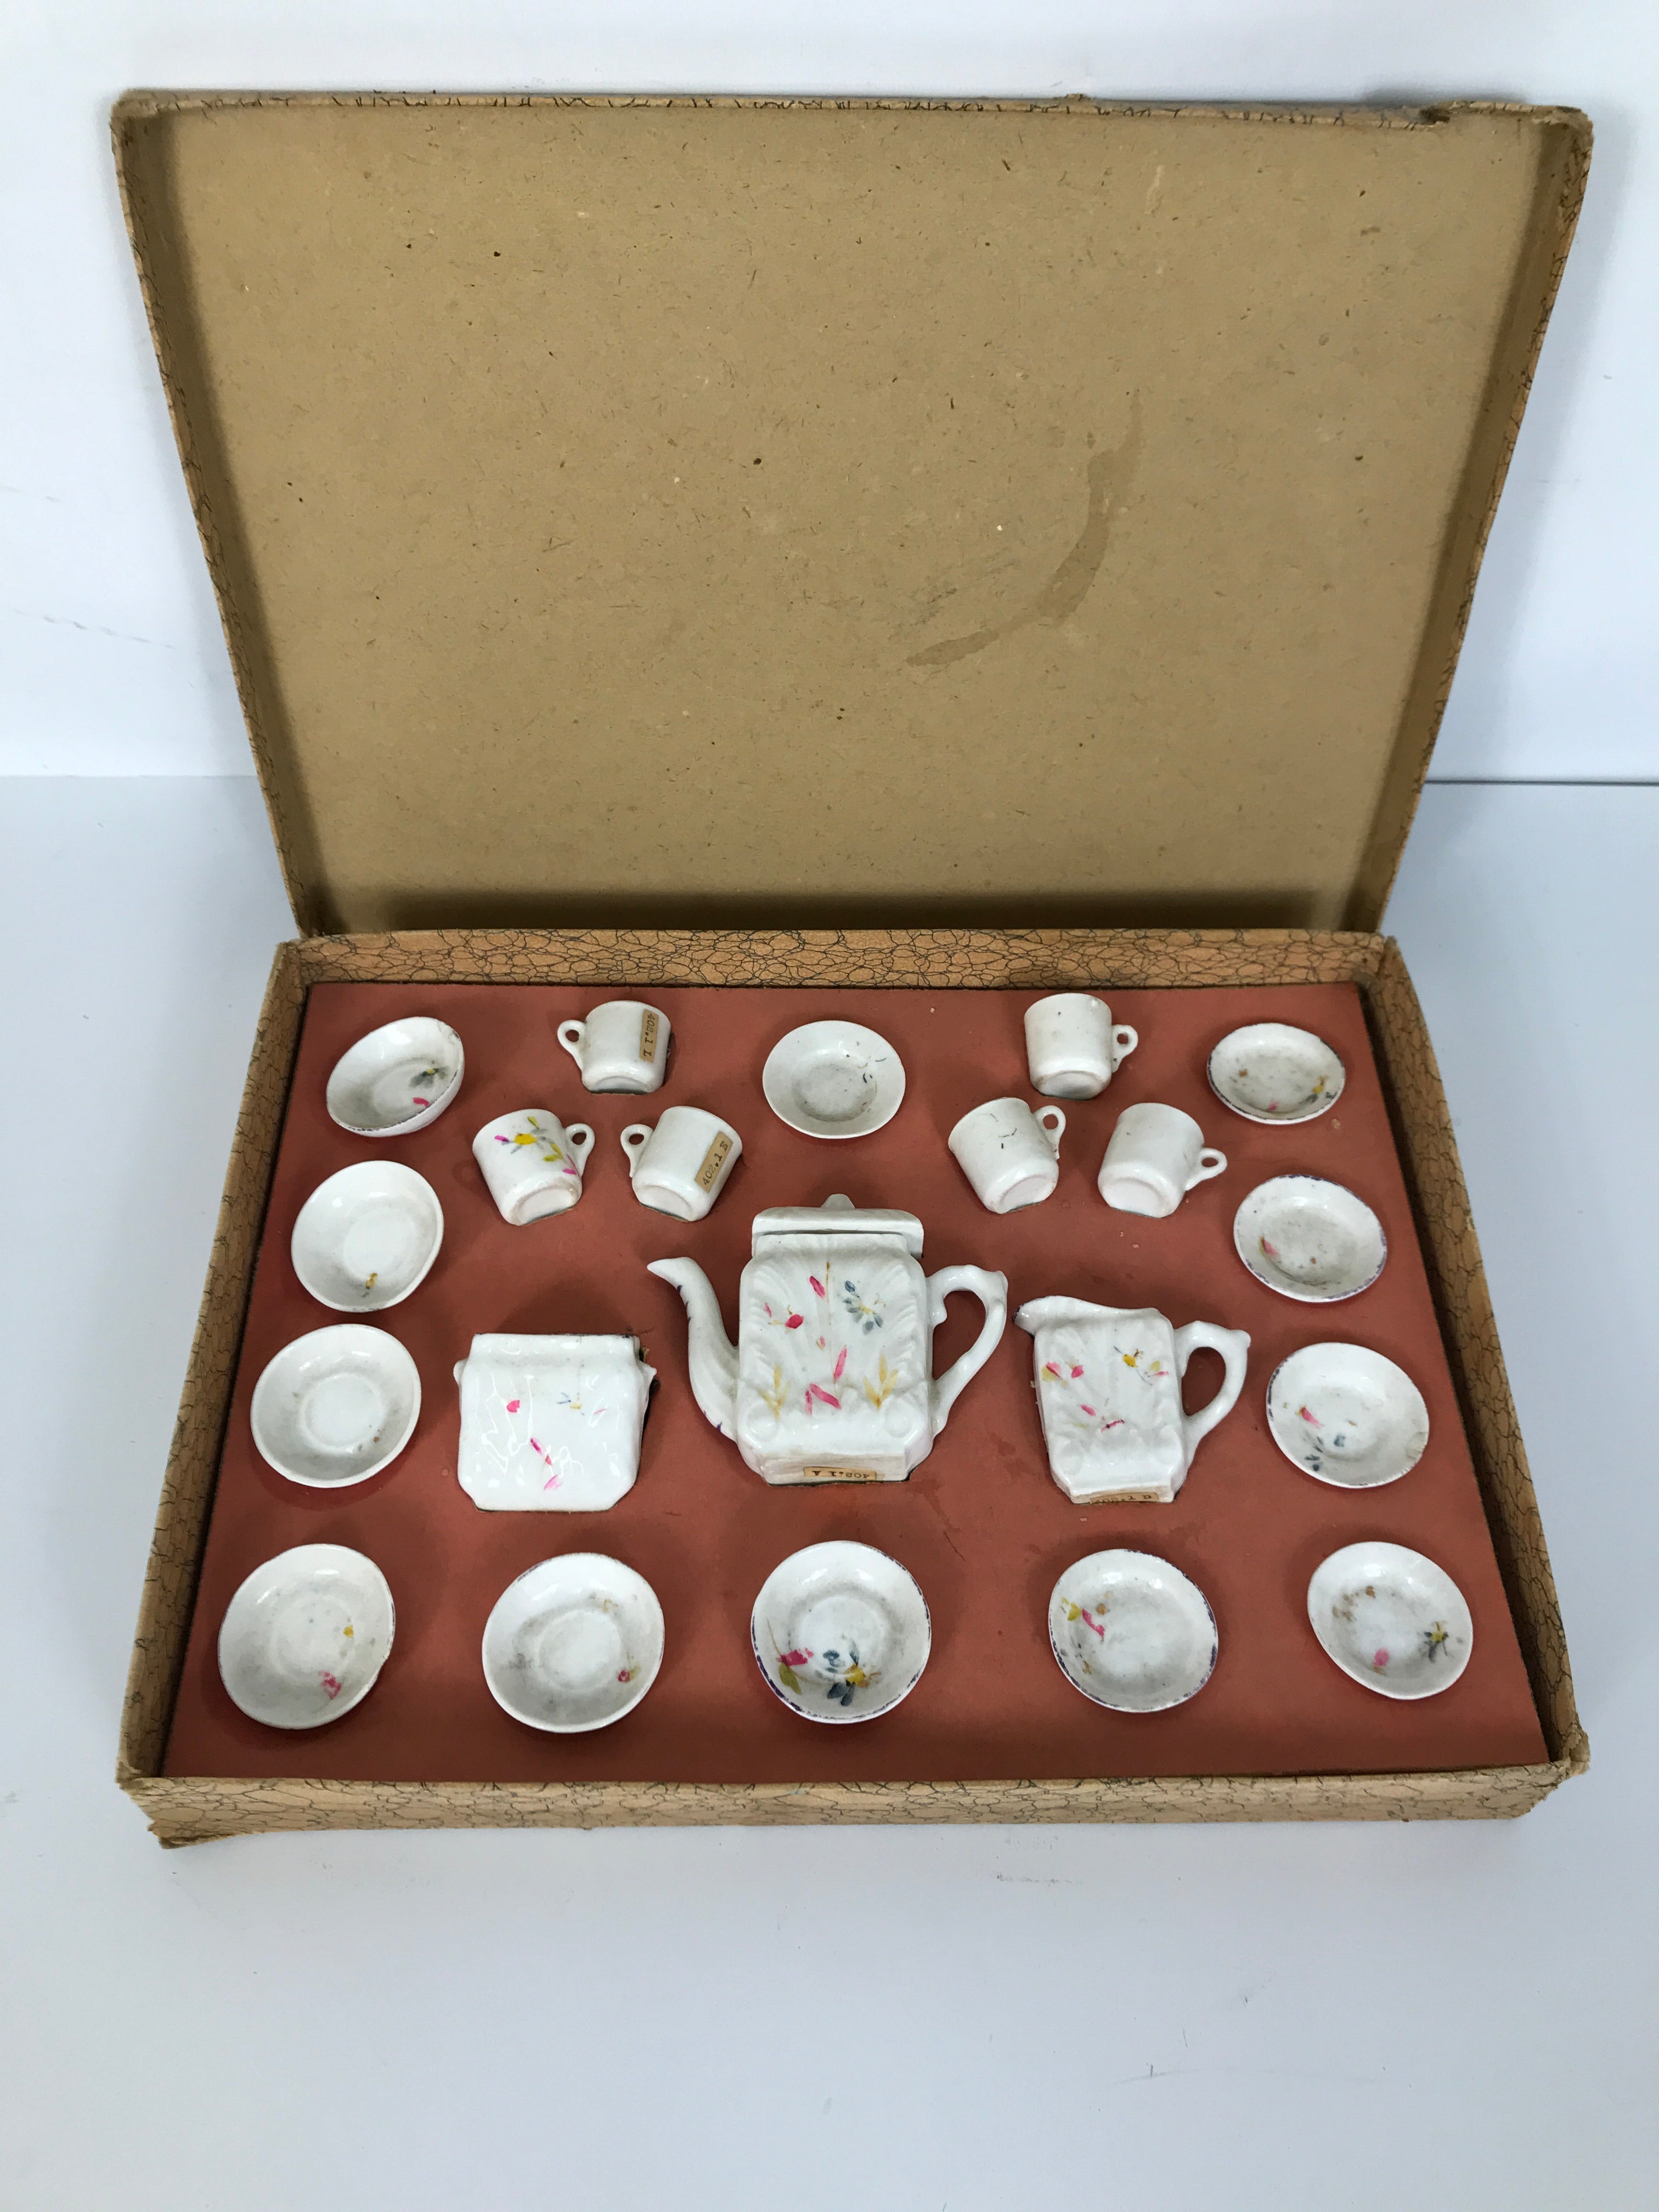 Antique Child's 22 Piece Toy Tea Set Complete in Original Box